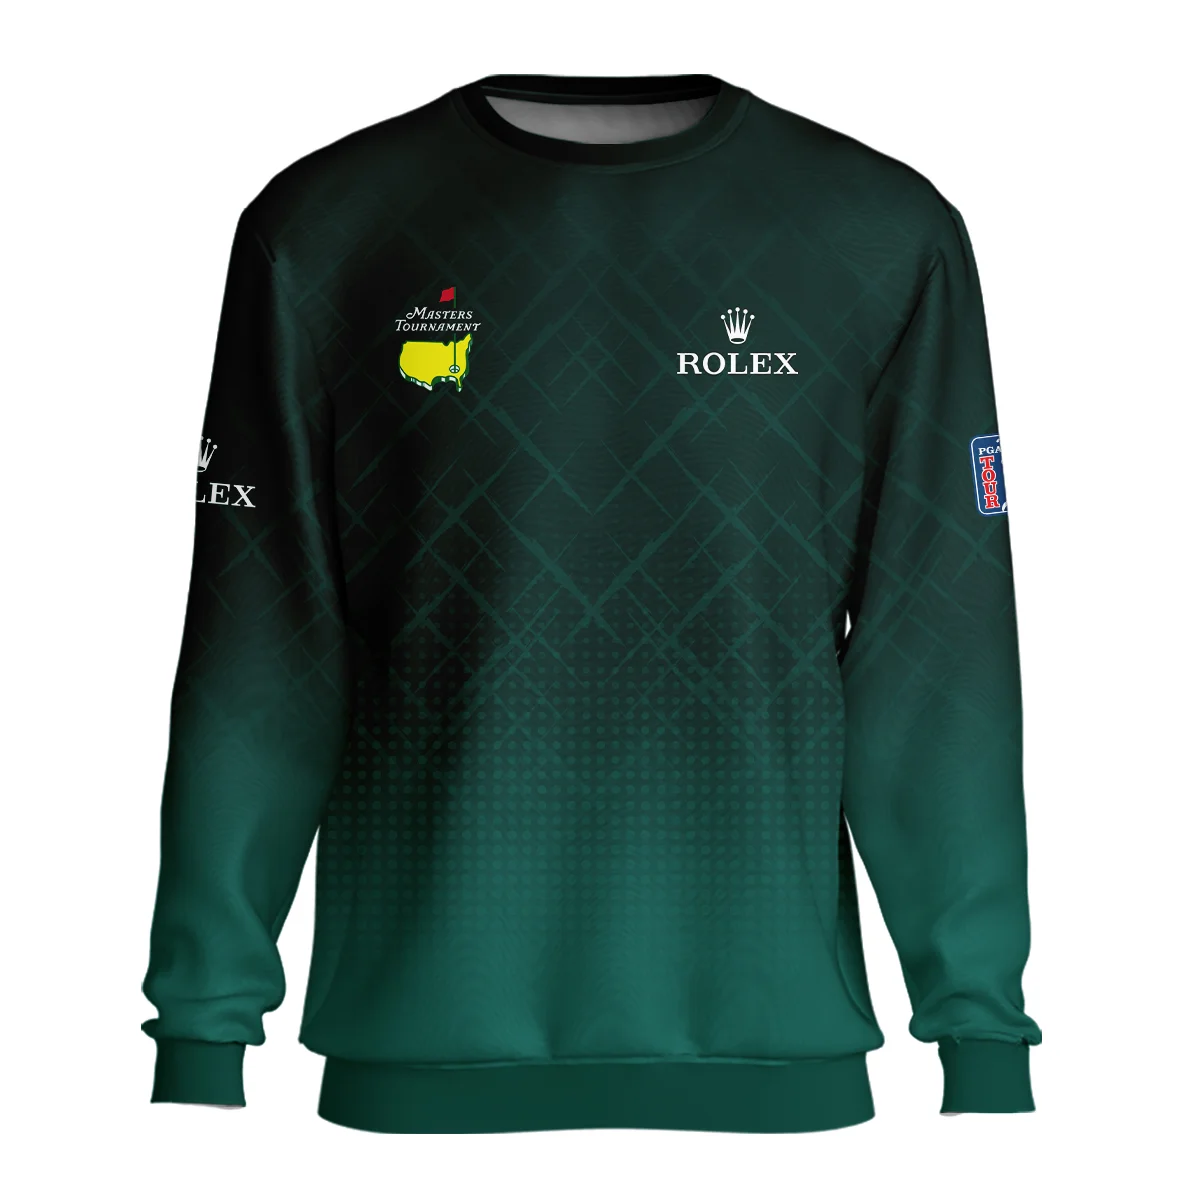 Rolex Masters Tournament Sport Jersey Pattern Dark Green Bomber Jacket Style Classic Bomber Jacket